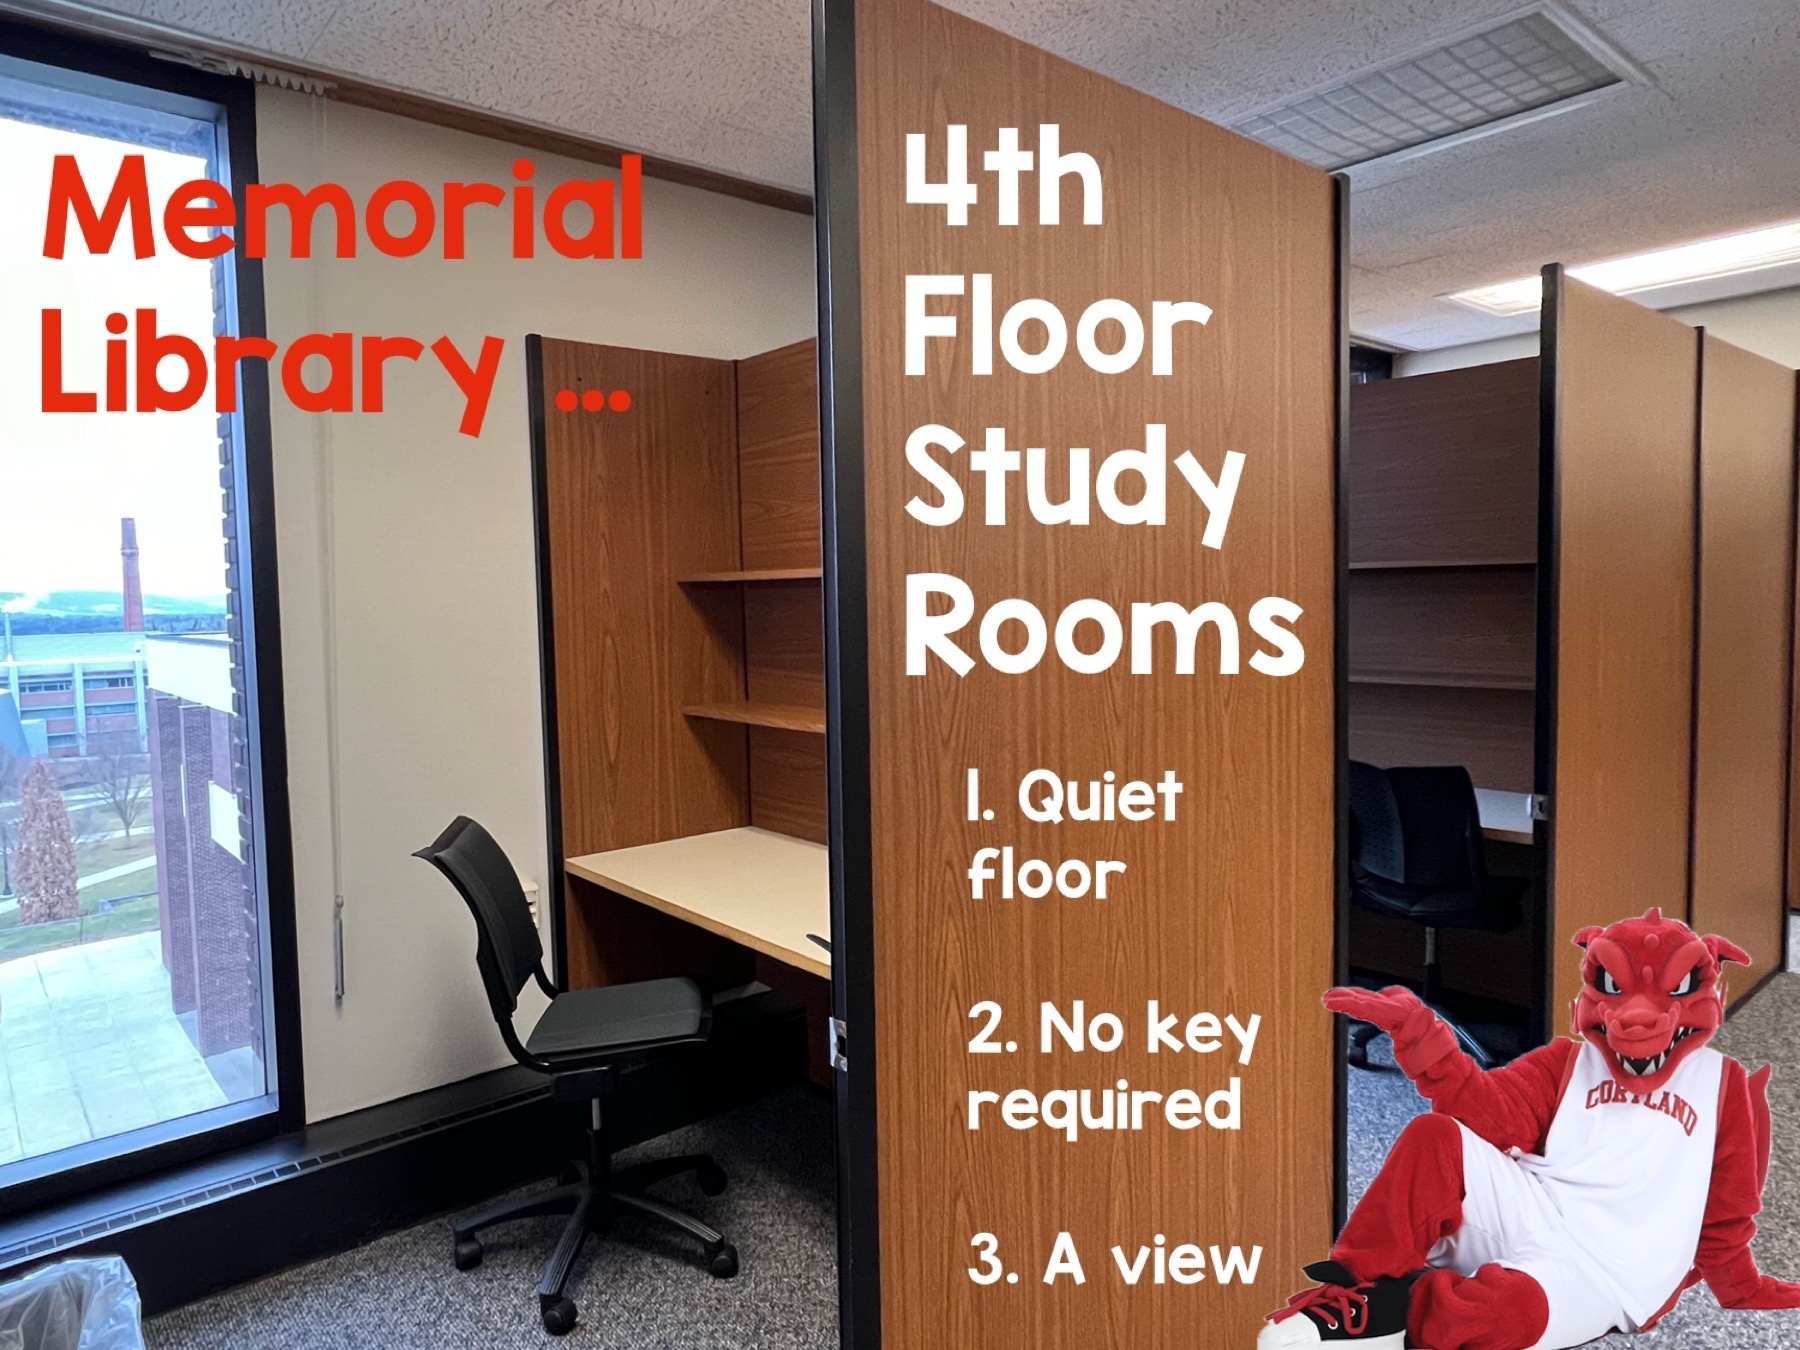 4th Floor Study Rooms